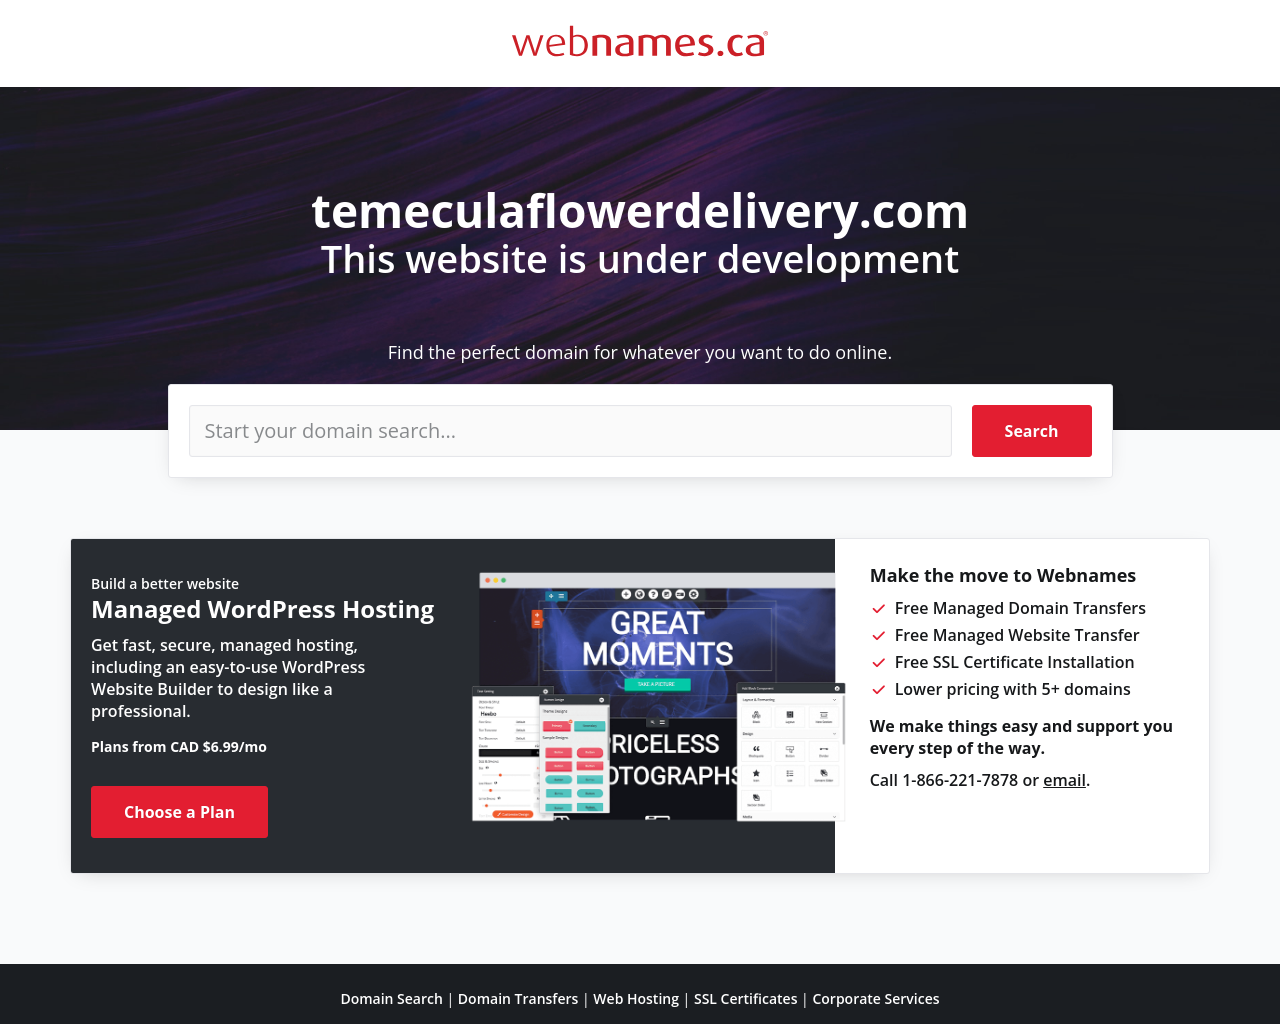 temeculaflowerdelivery.com